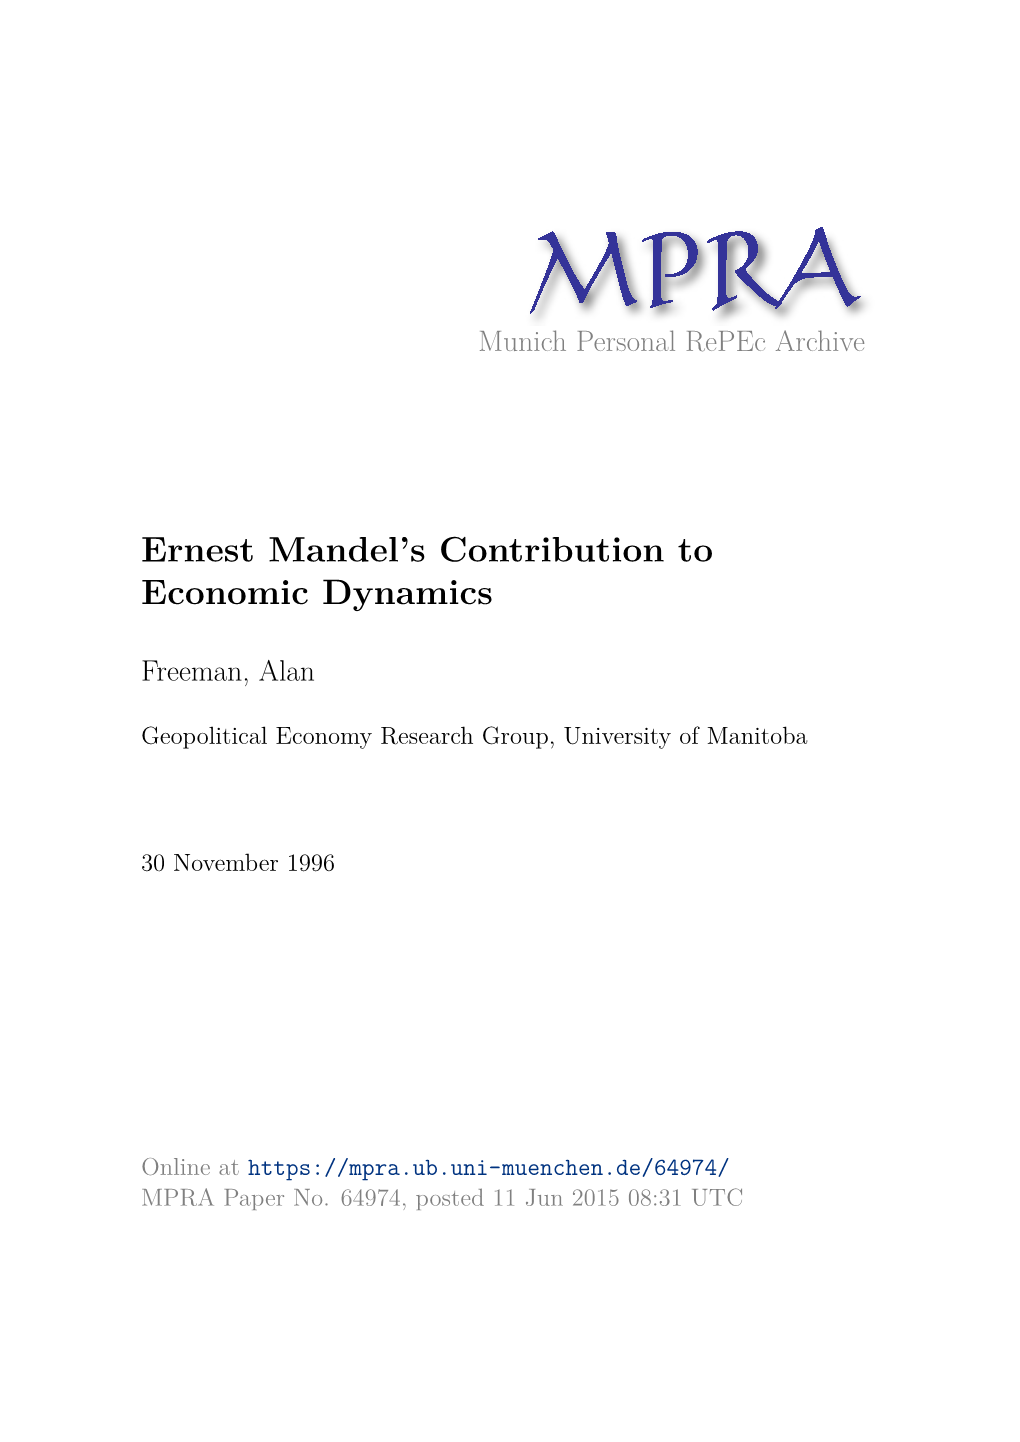 Ernest Mandel's Contribution to Economic Dynamics